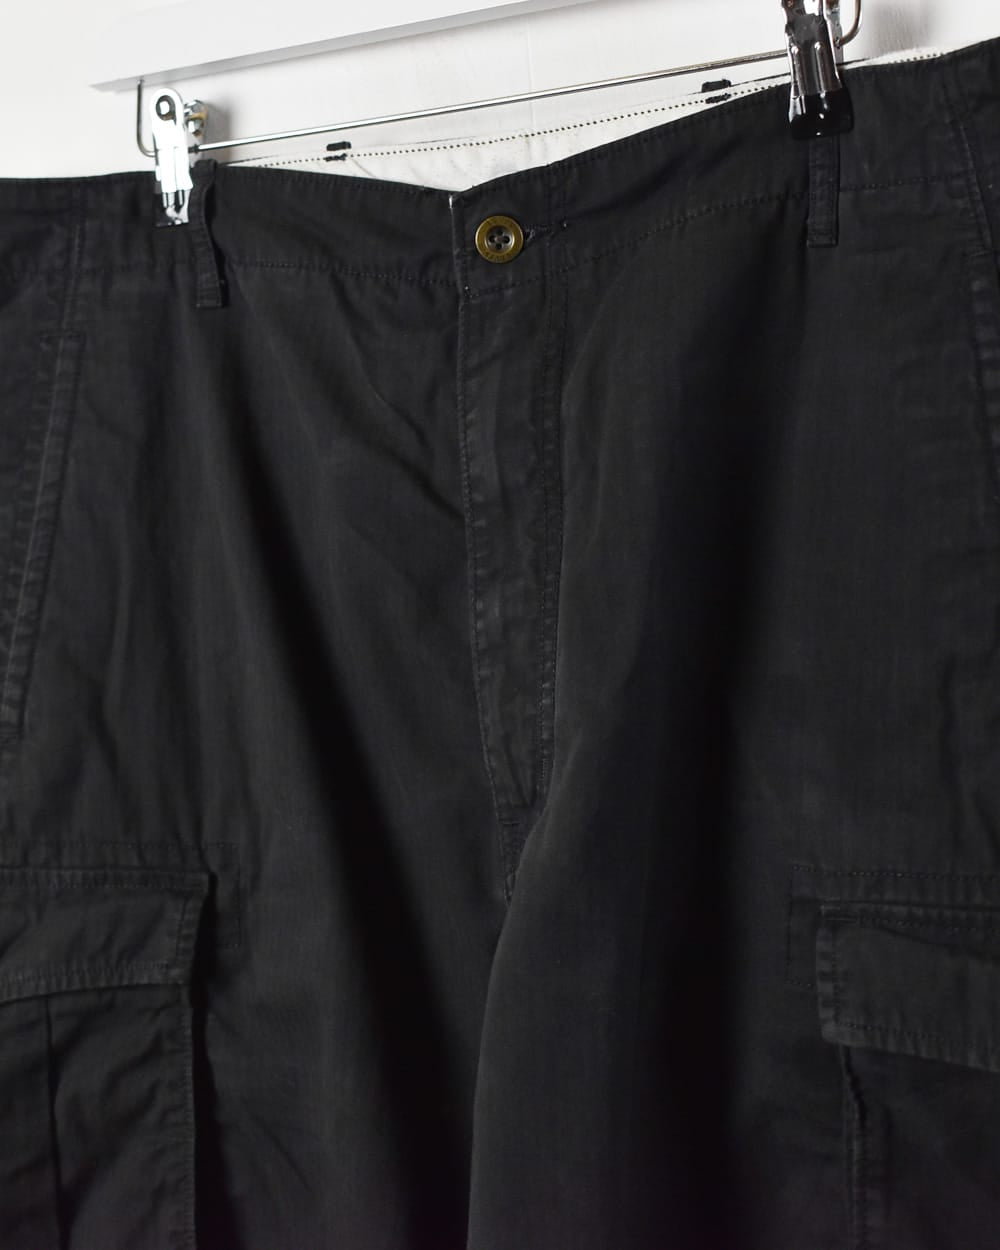 Black Levi's Cargo Shorts - W40 L23